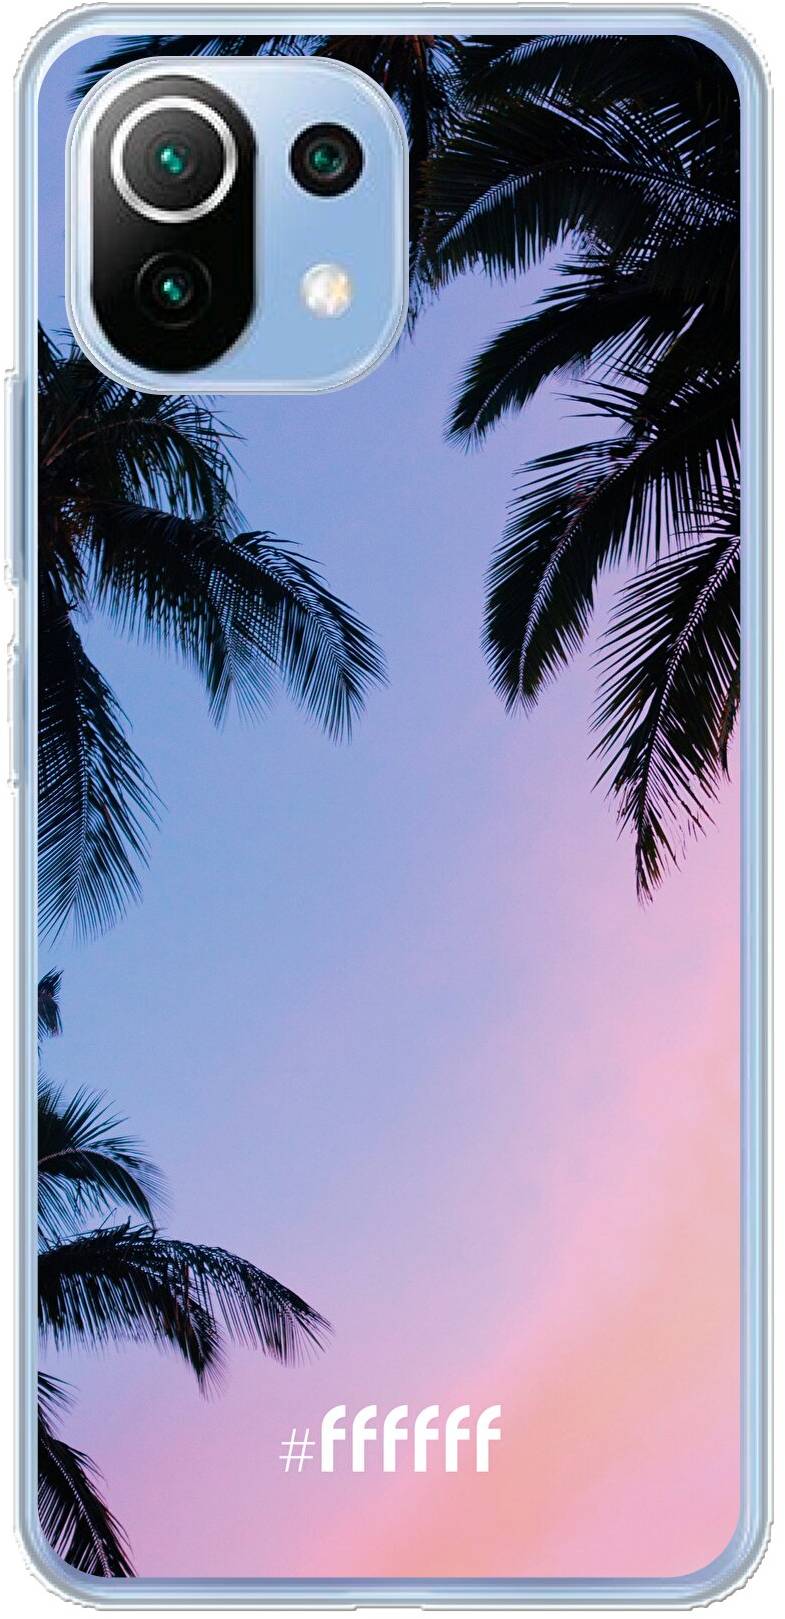 Sunset Palms Mi 11 Lite